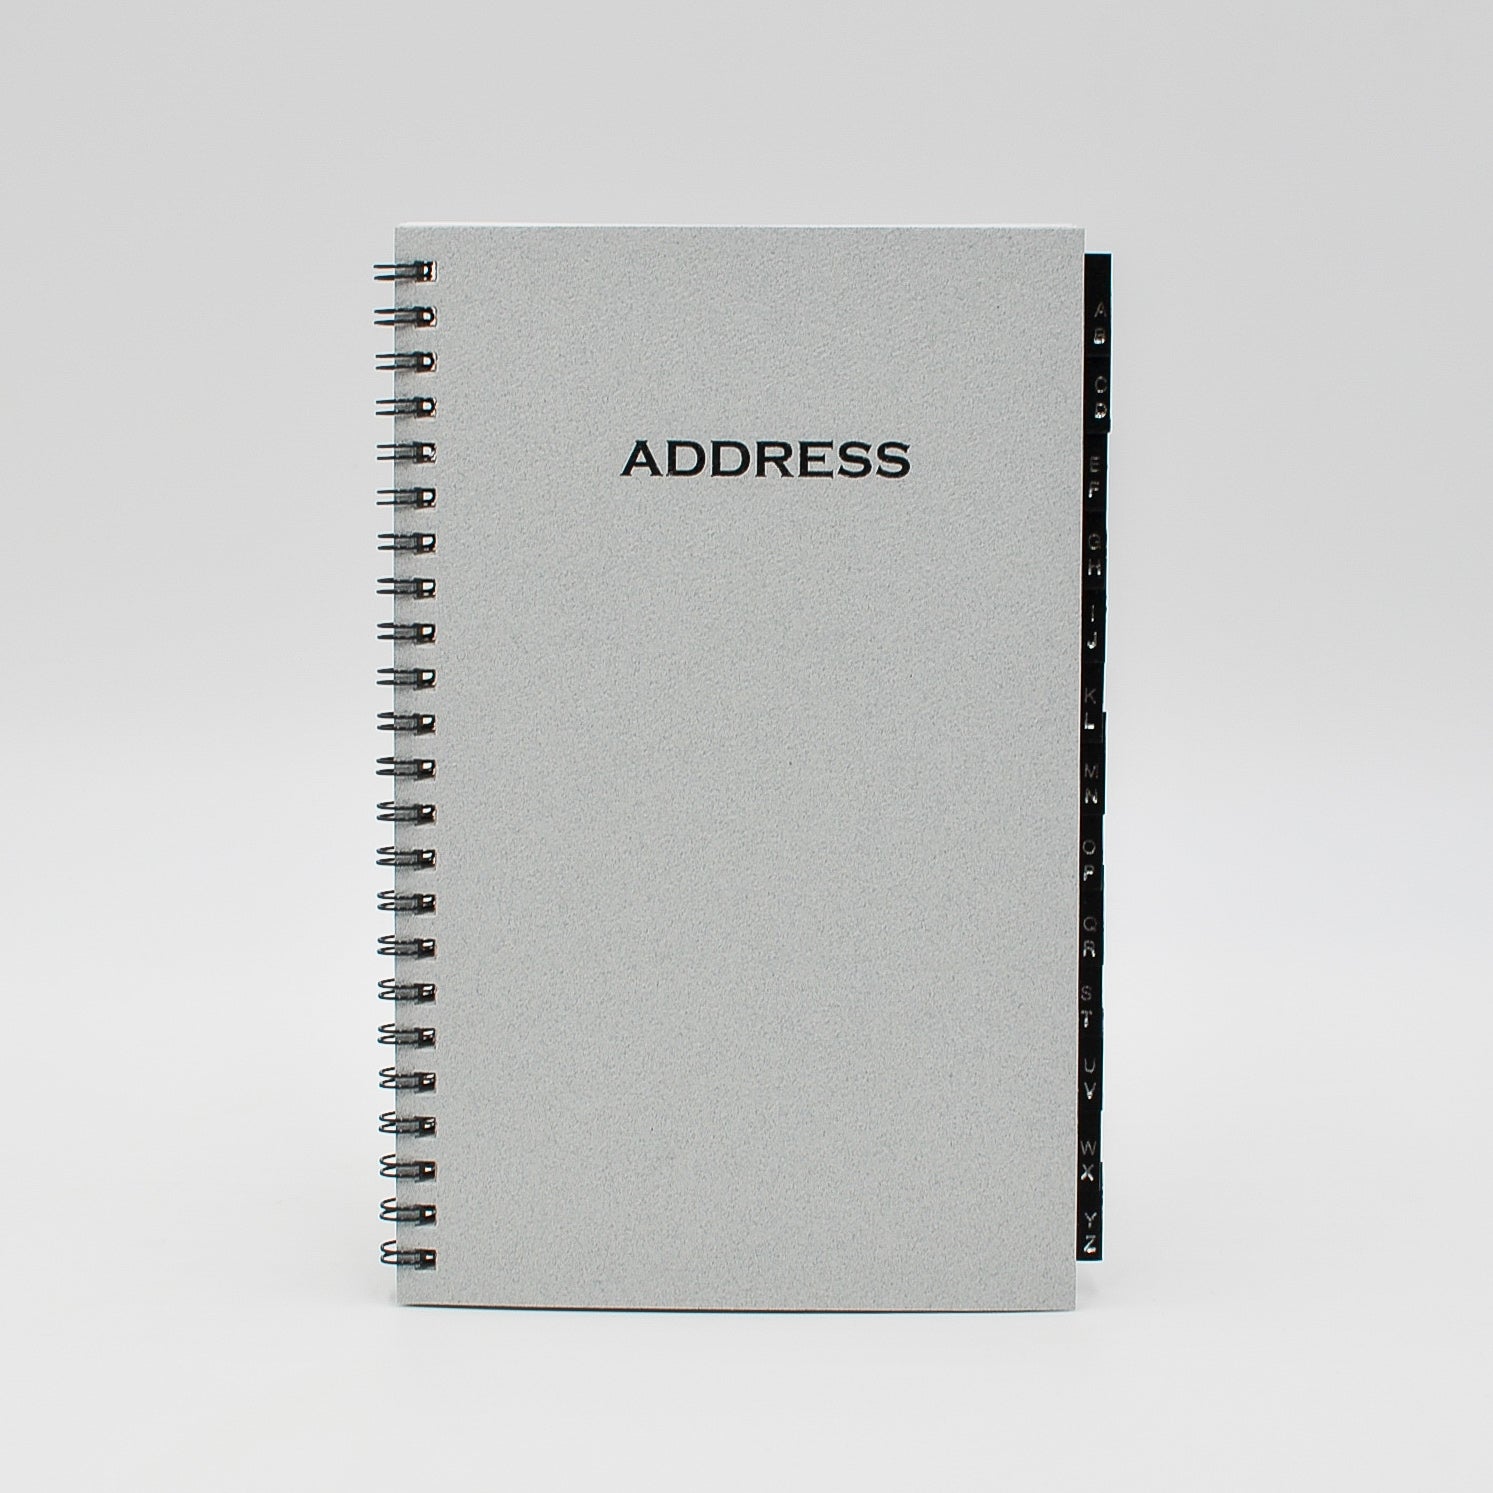 Address/Telephone Wirebound 2-5/8 x 4-1/2 Book: AD42WI - REFILL